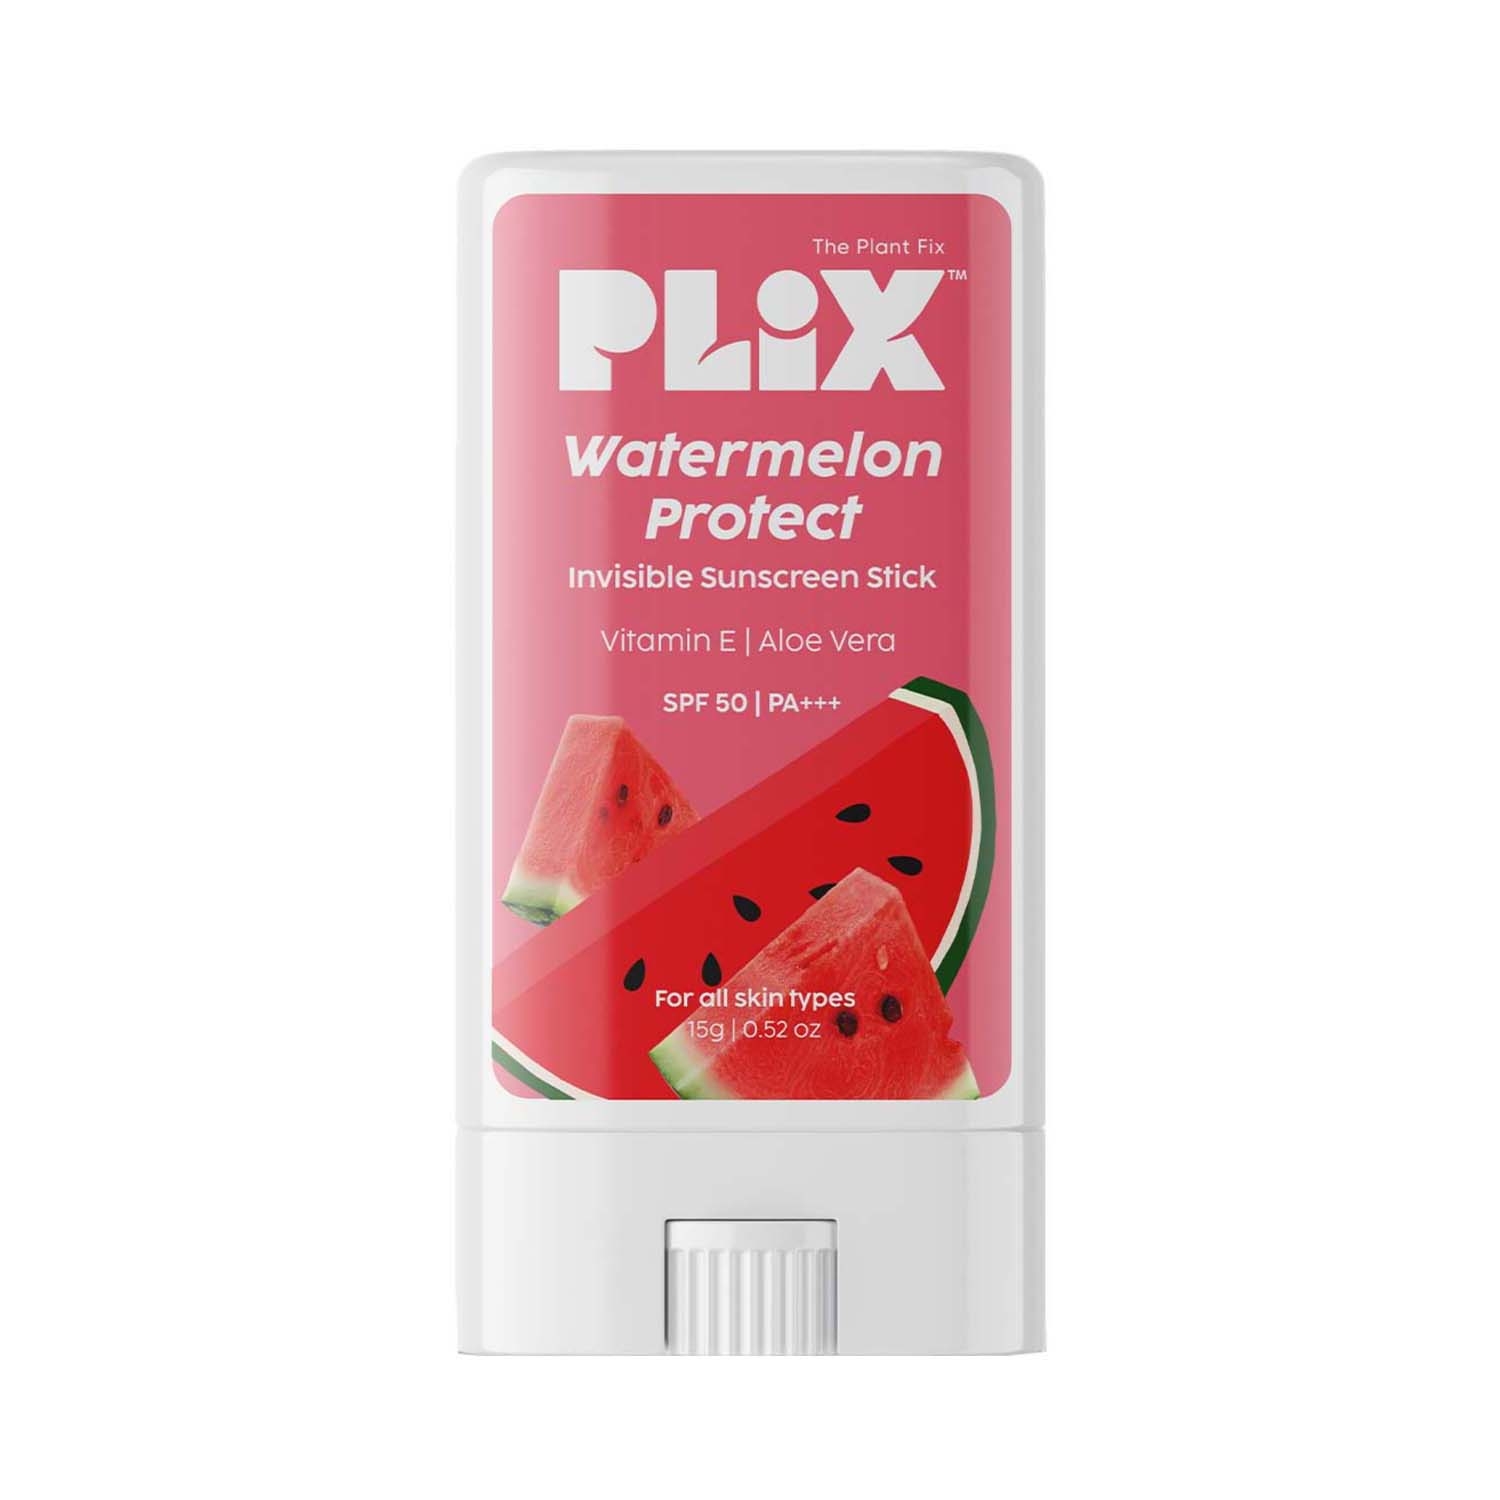 Plix The Plant Fix | Plix The Plant Fix Watermelon Invisible Sunscreen Stick SPF 50 PA +++ (15g)